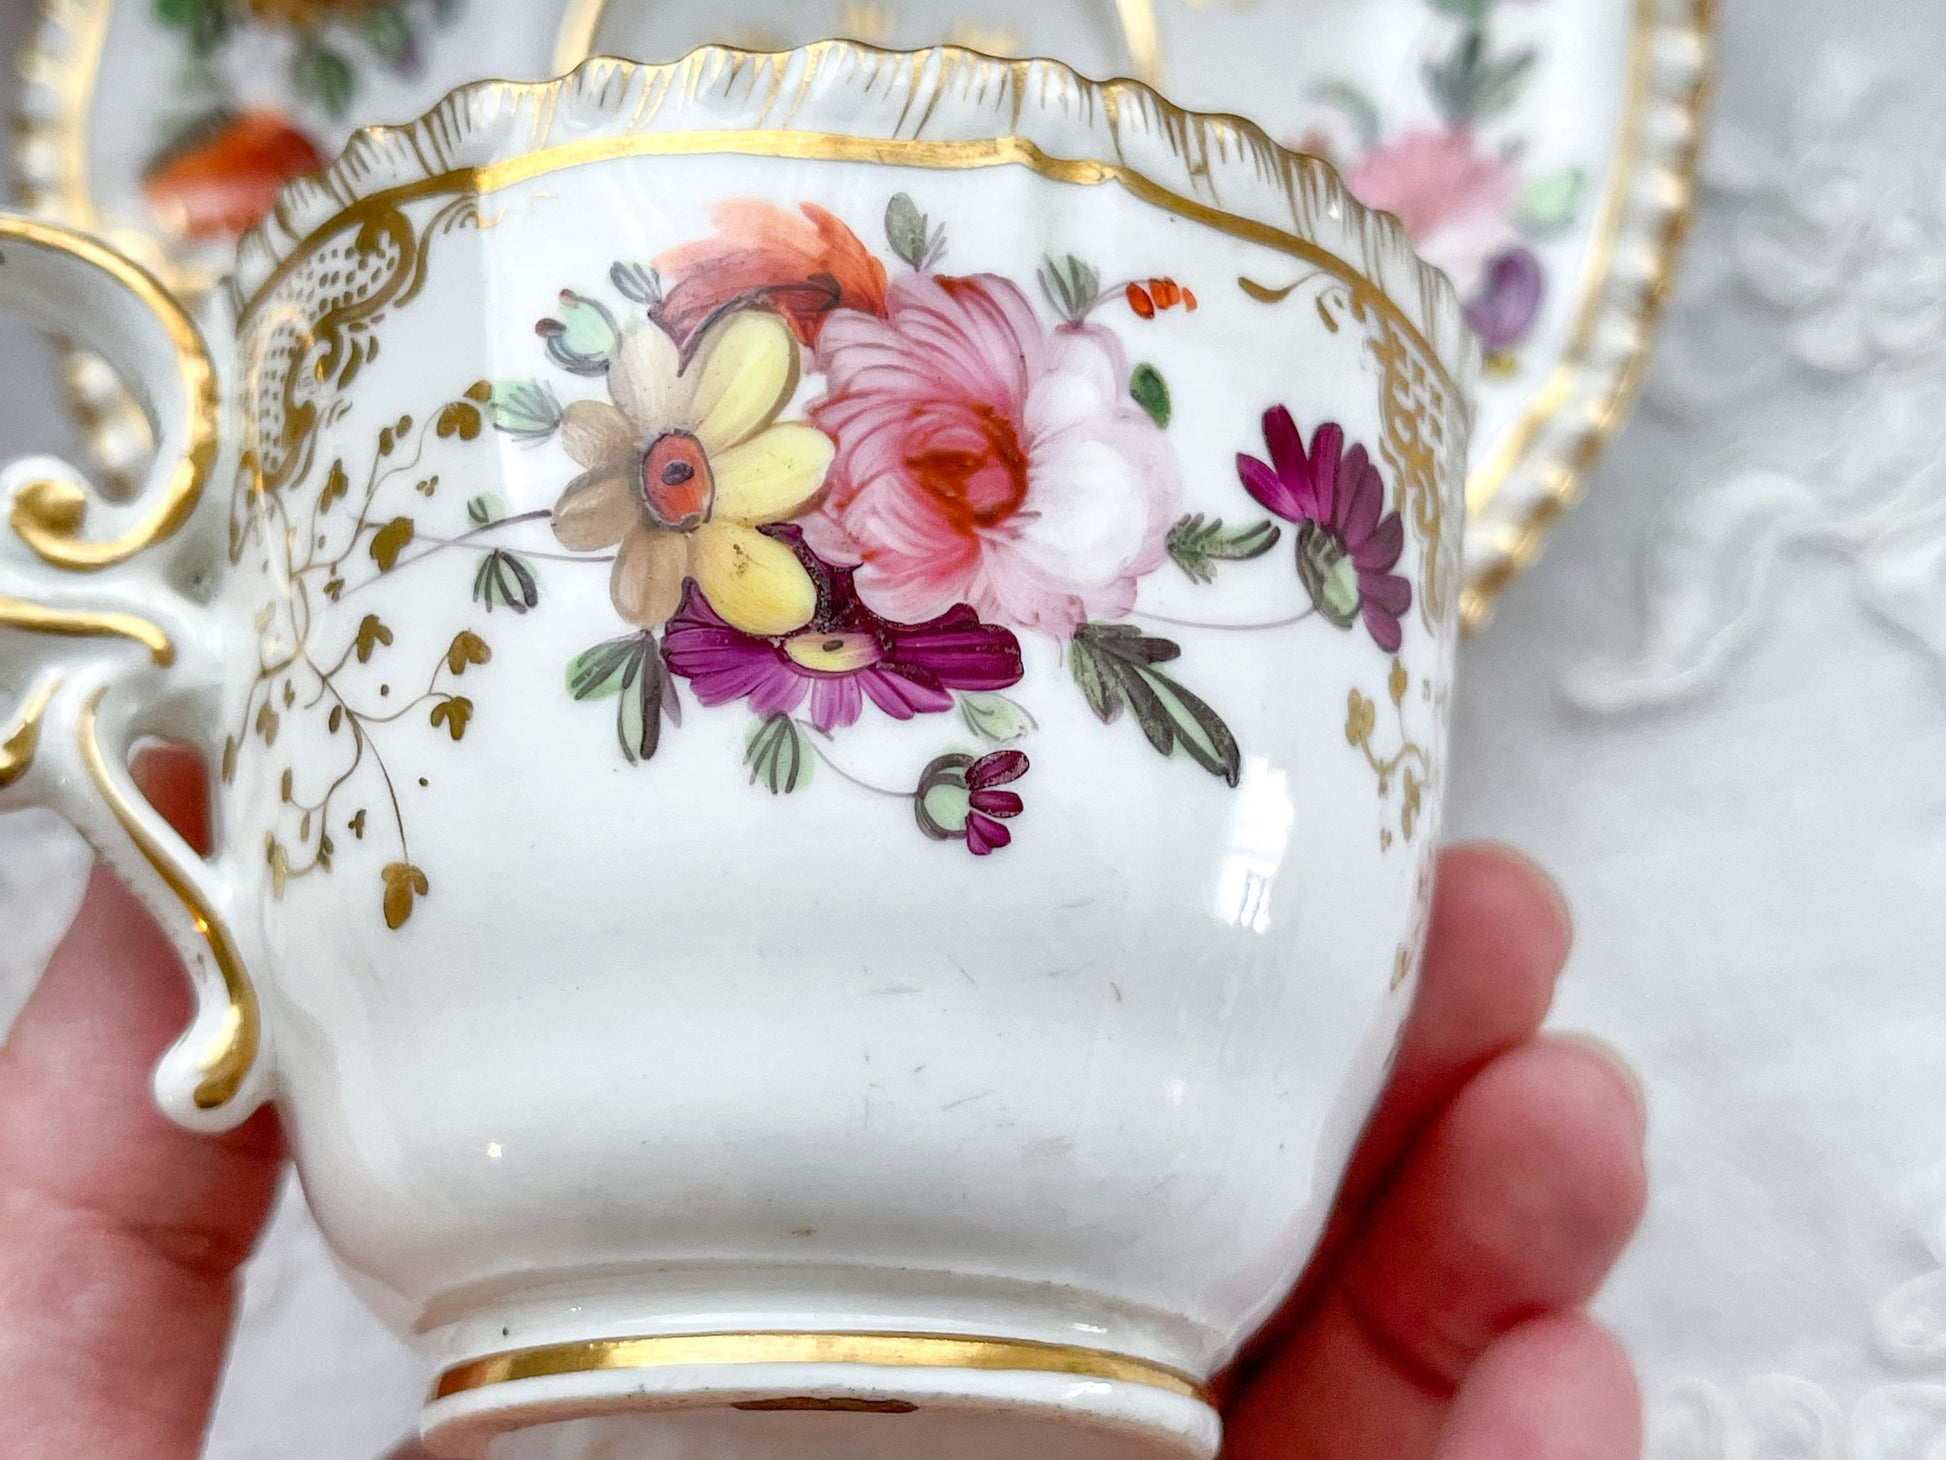 Rose Antiquesの英国アンティーク。コールポートのペンブロークシェイプのトゥルートリオ。コーヒーカップ、ティーカップ、ソーサーのセットで手書きで描かれた花々が大変美しいです。